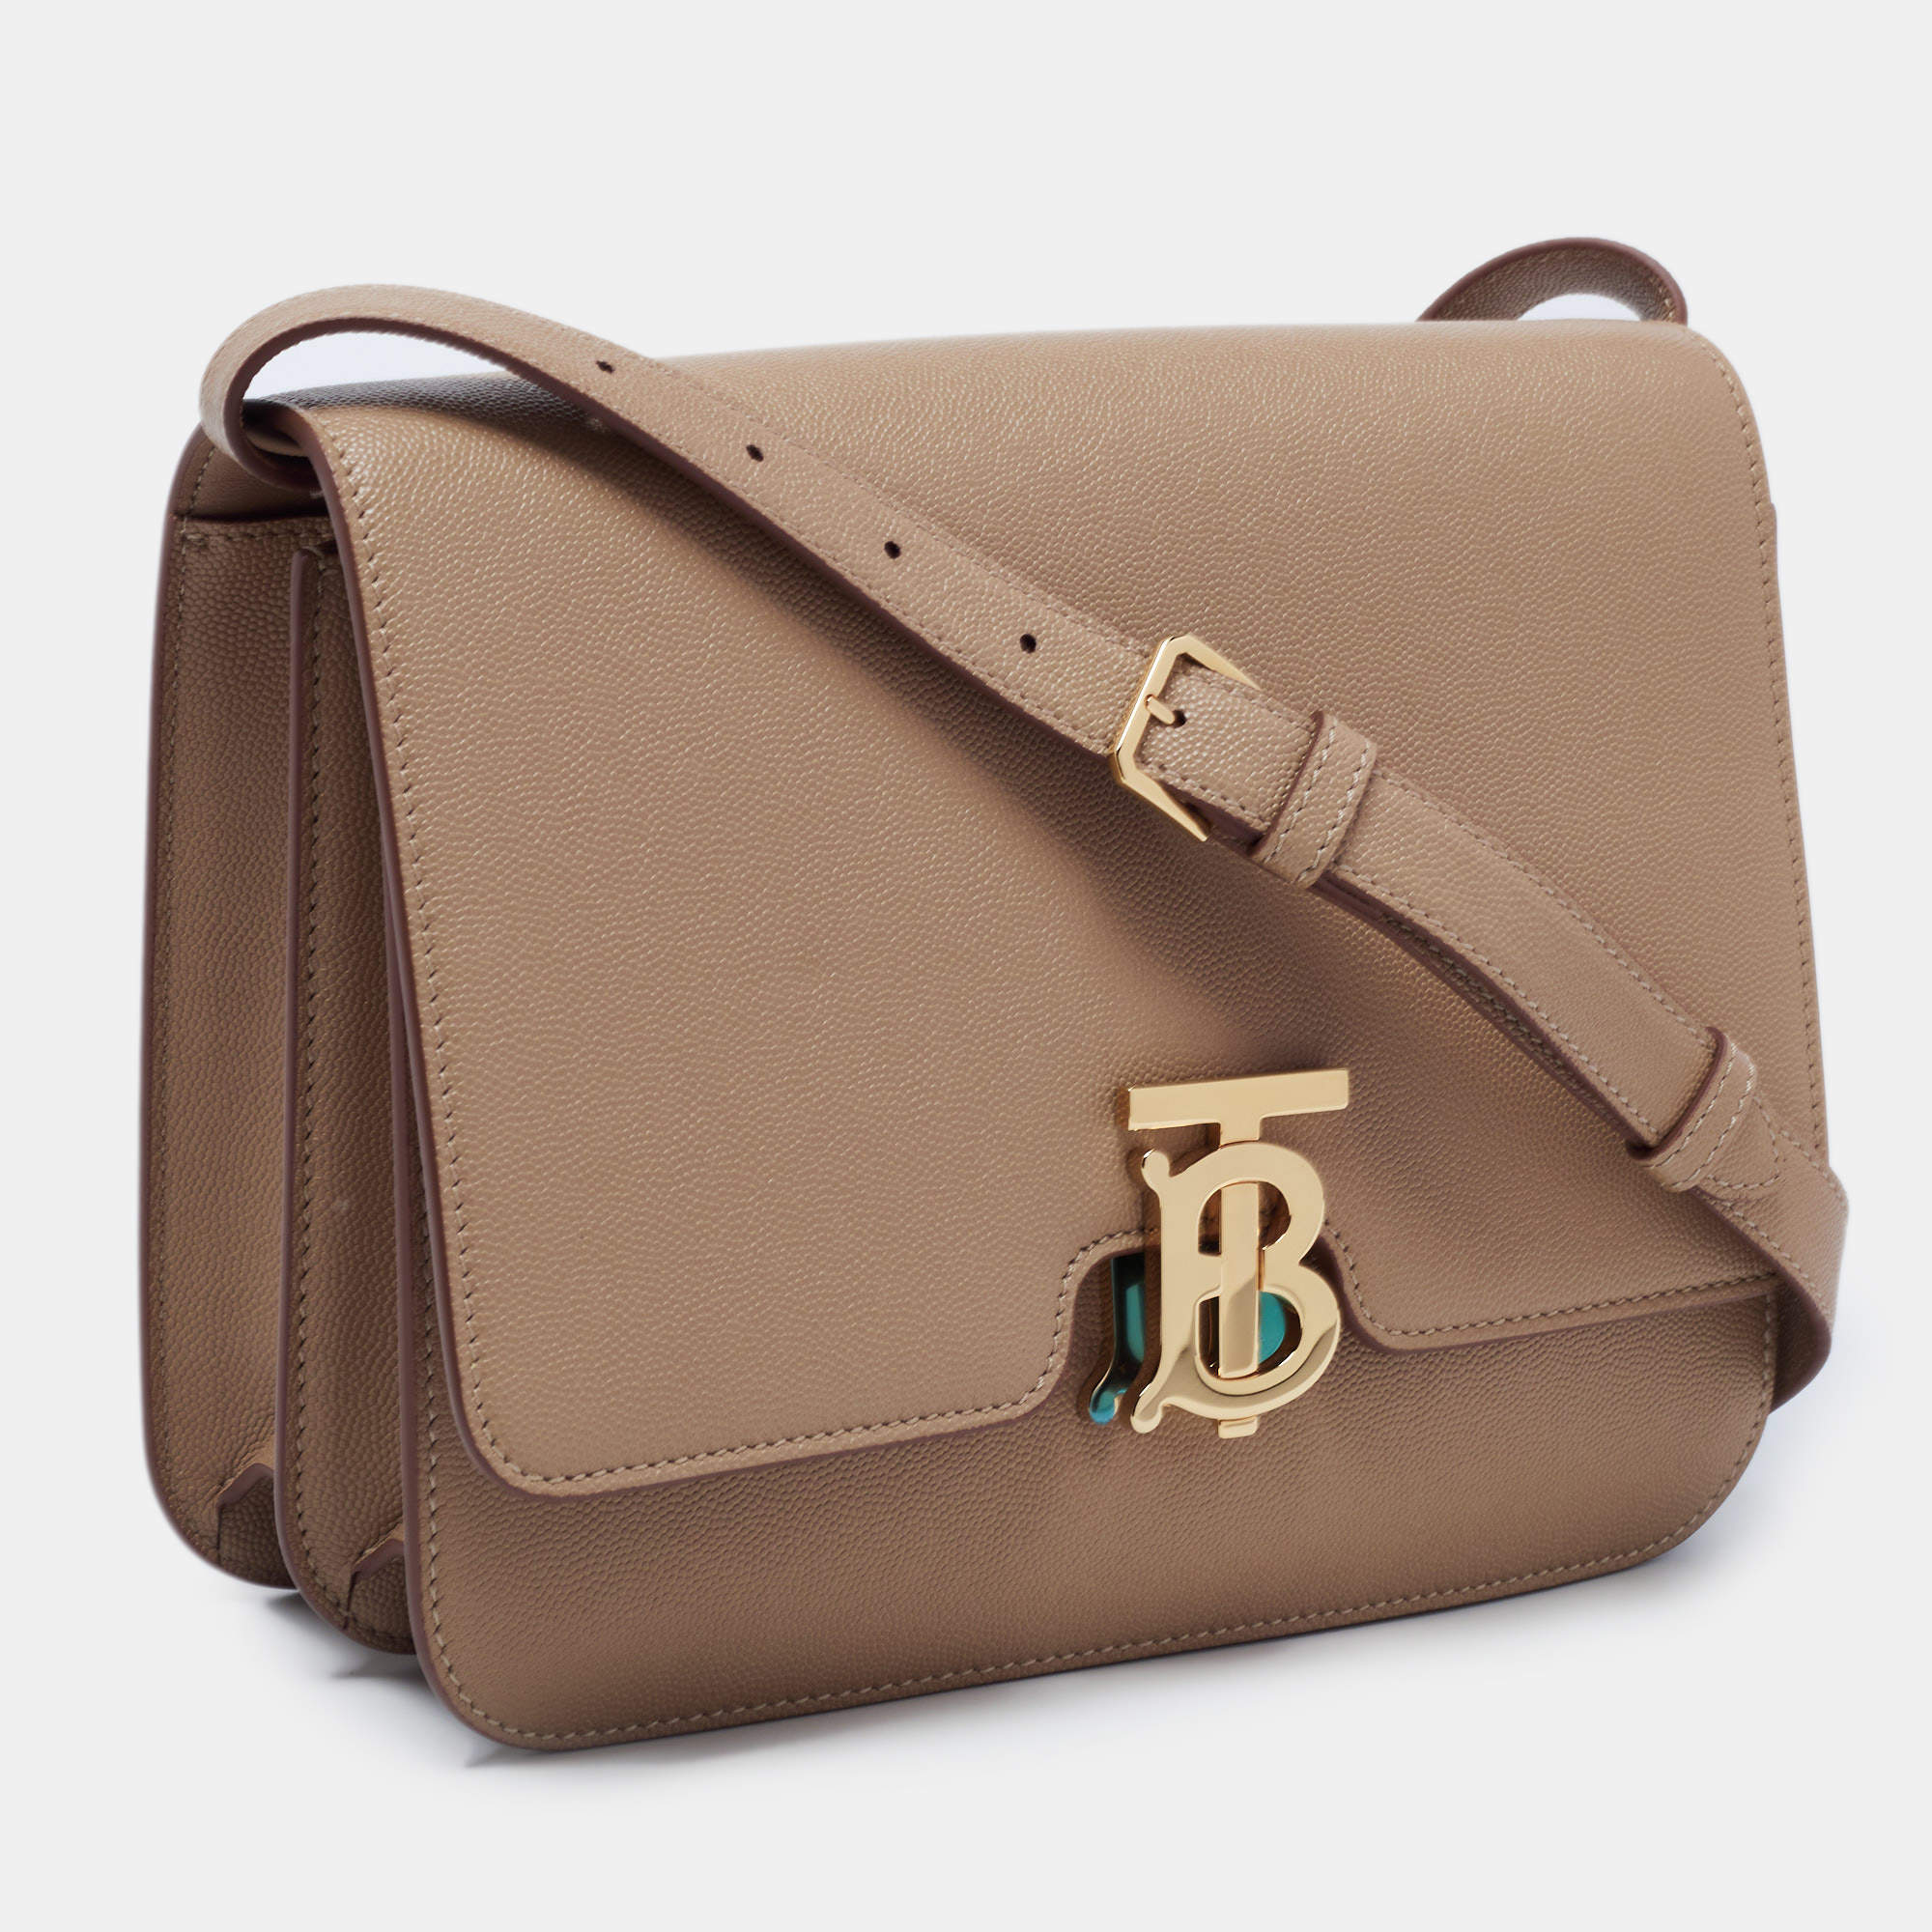 Tb bag leather handbag Burberry Beige in Leather - 32372937